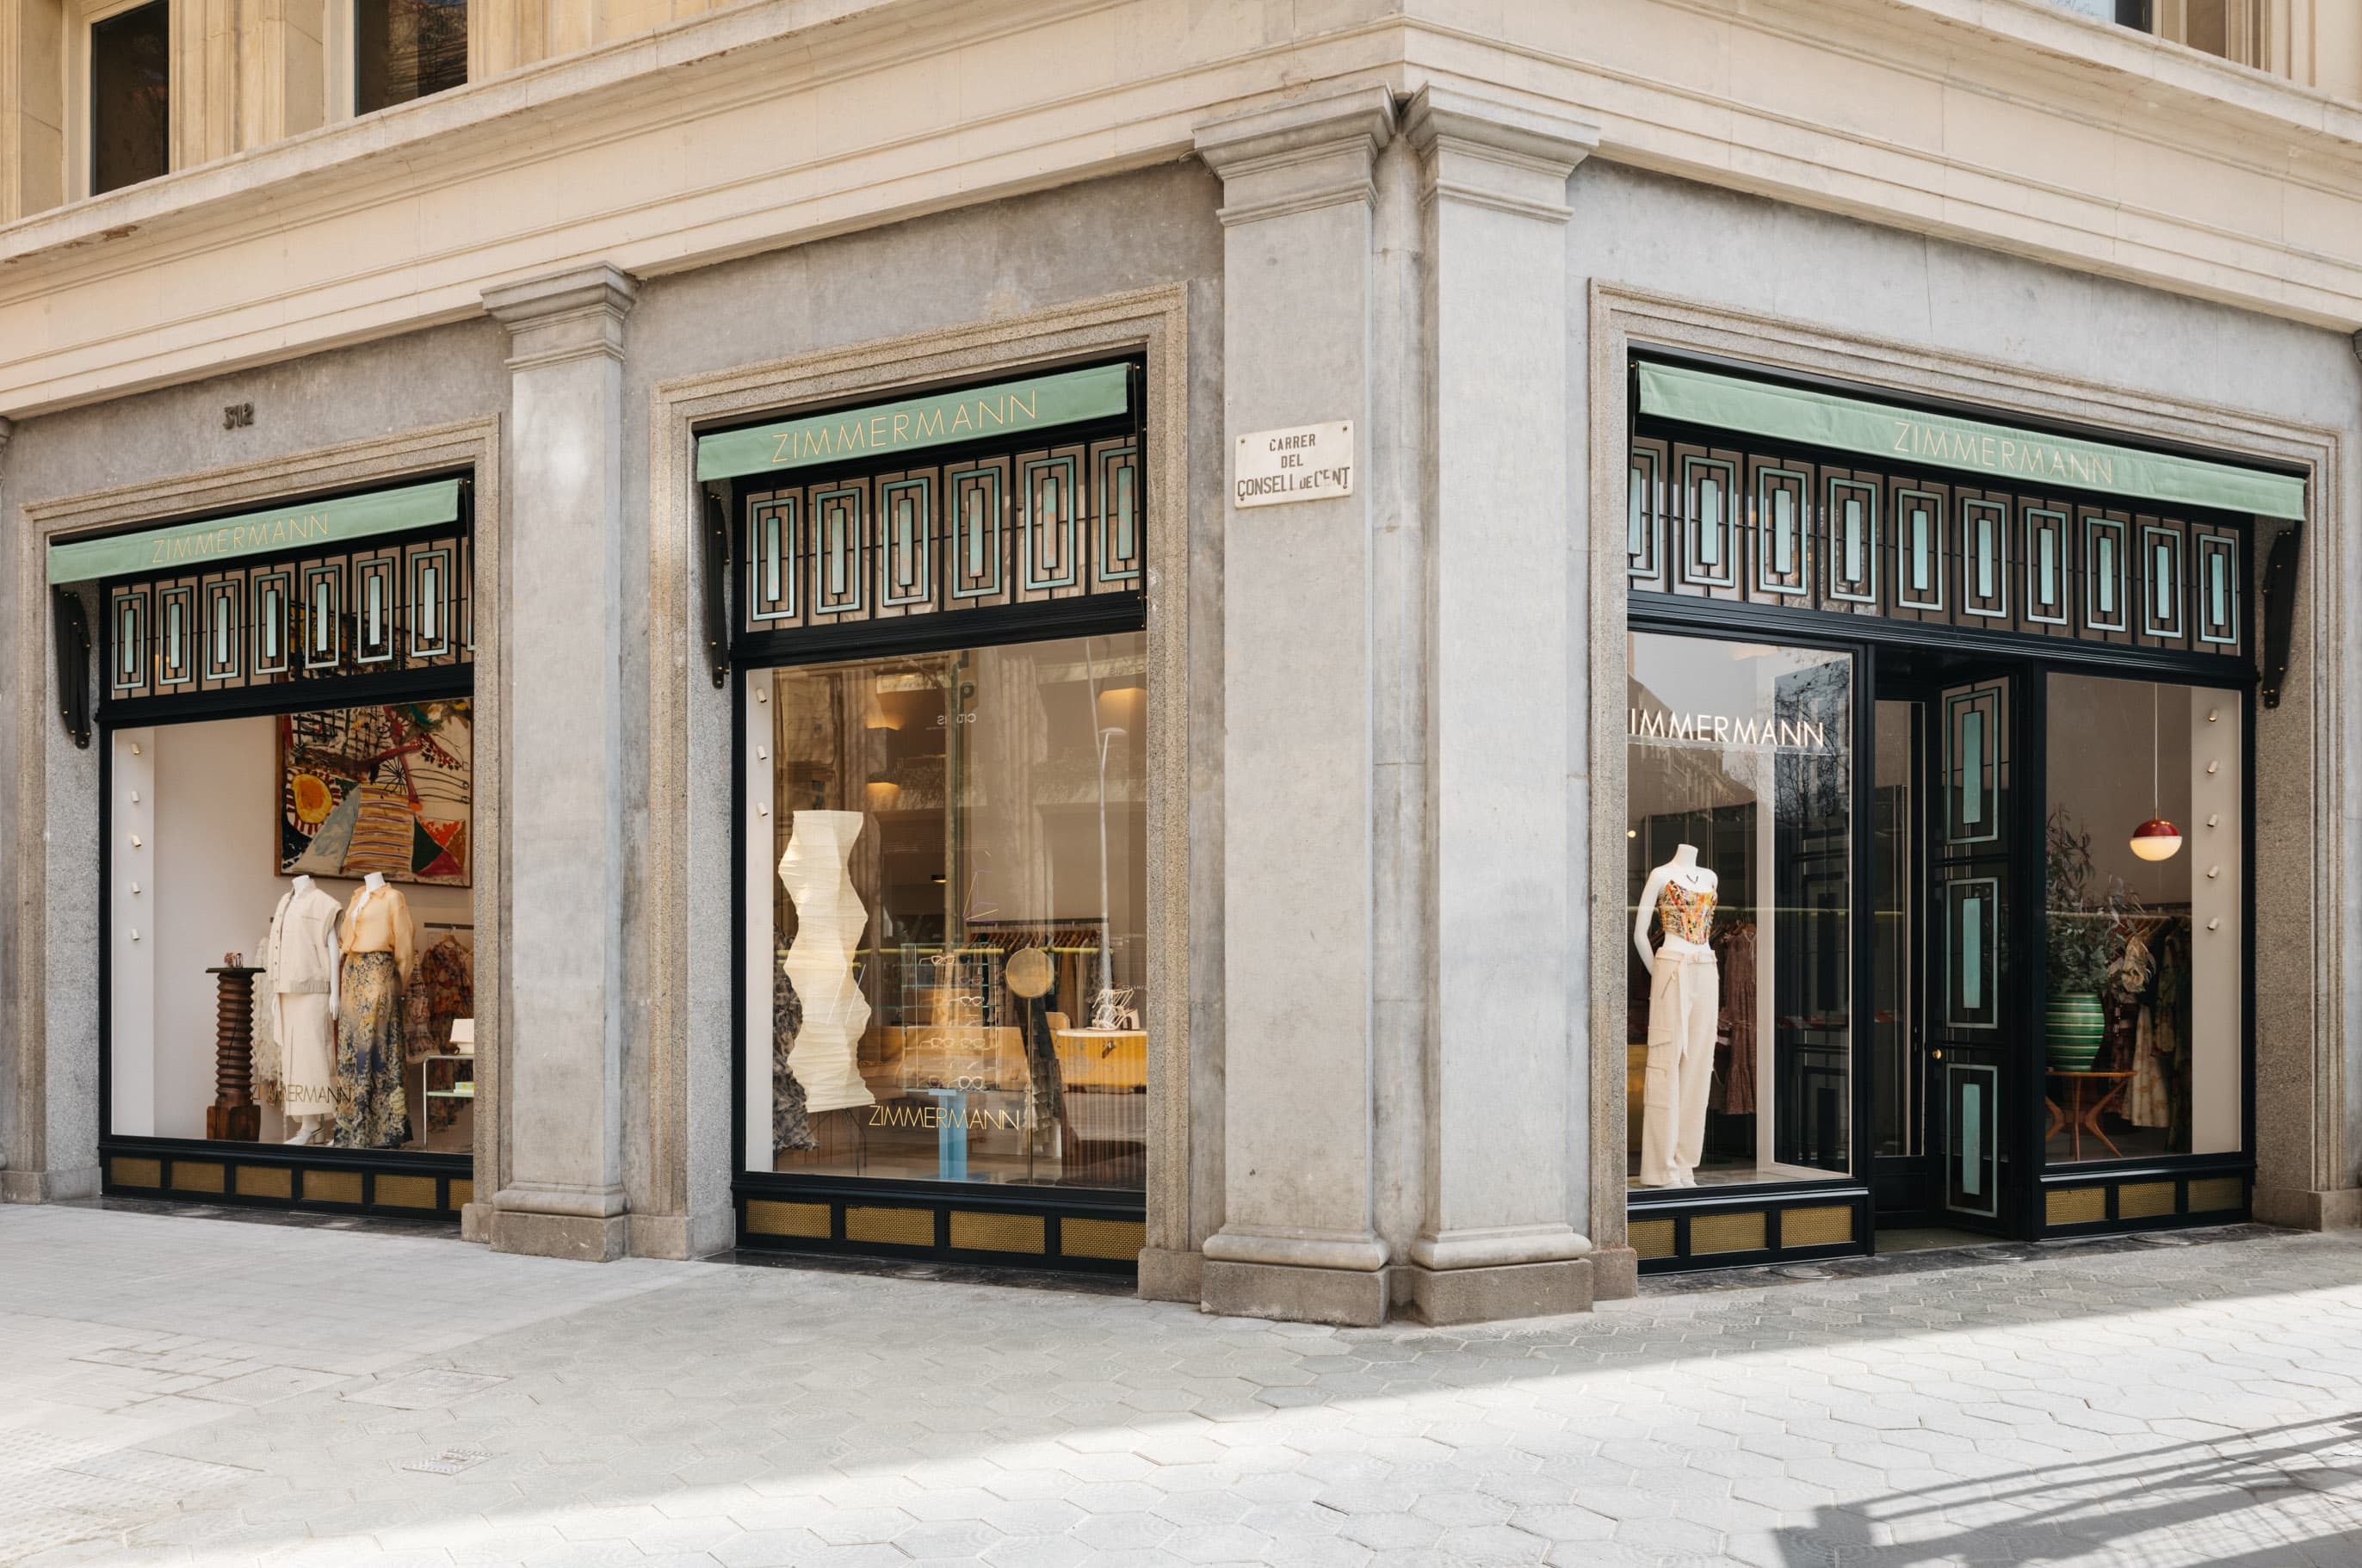 The entrance of the Louis Vuitton store on Barcelona's Passeig de